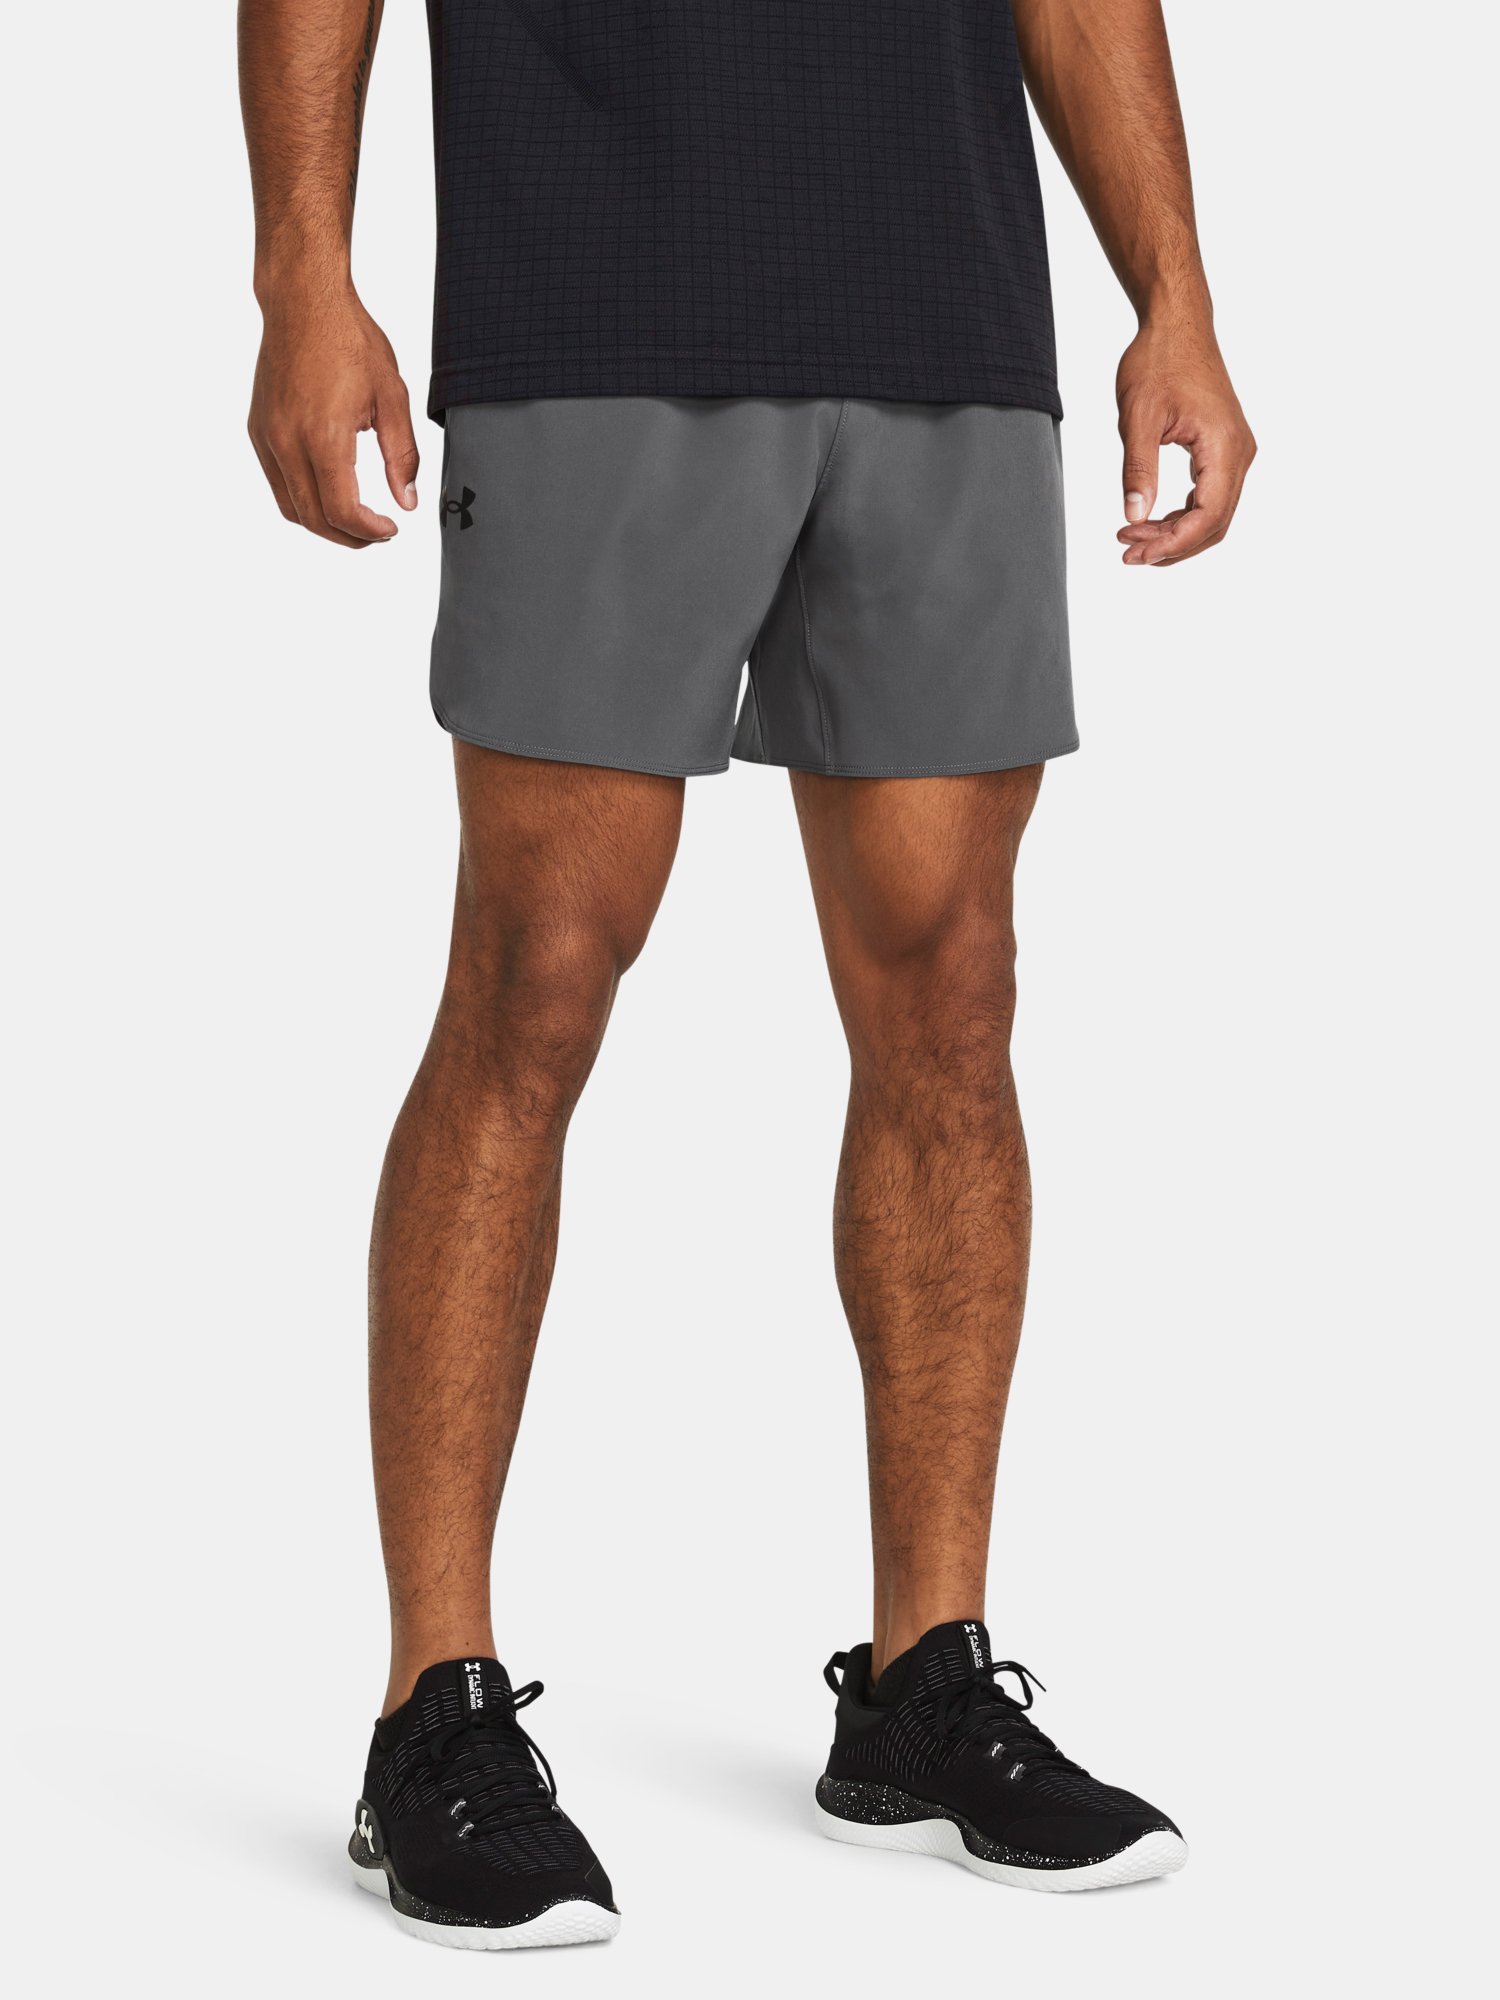 Under Armour UA Peak Woven Shorts - GRY - Men's